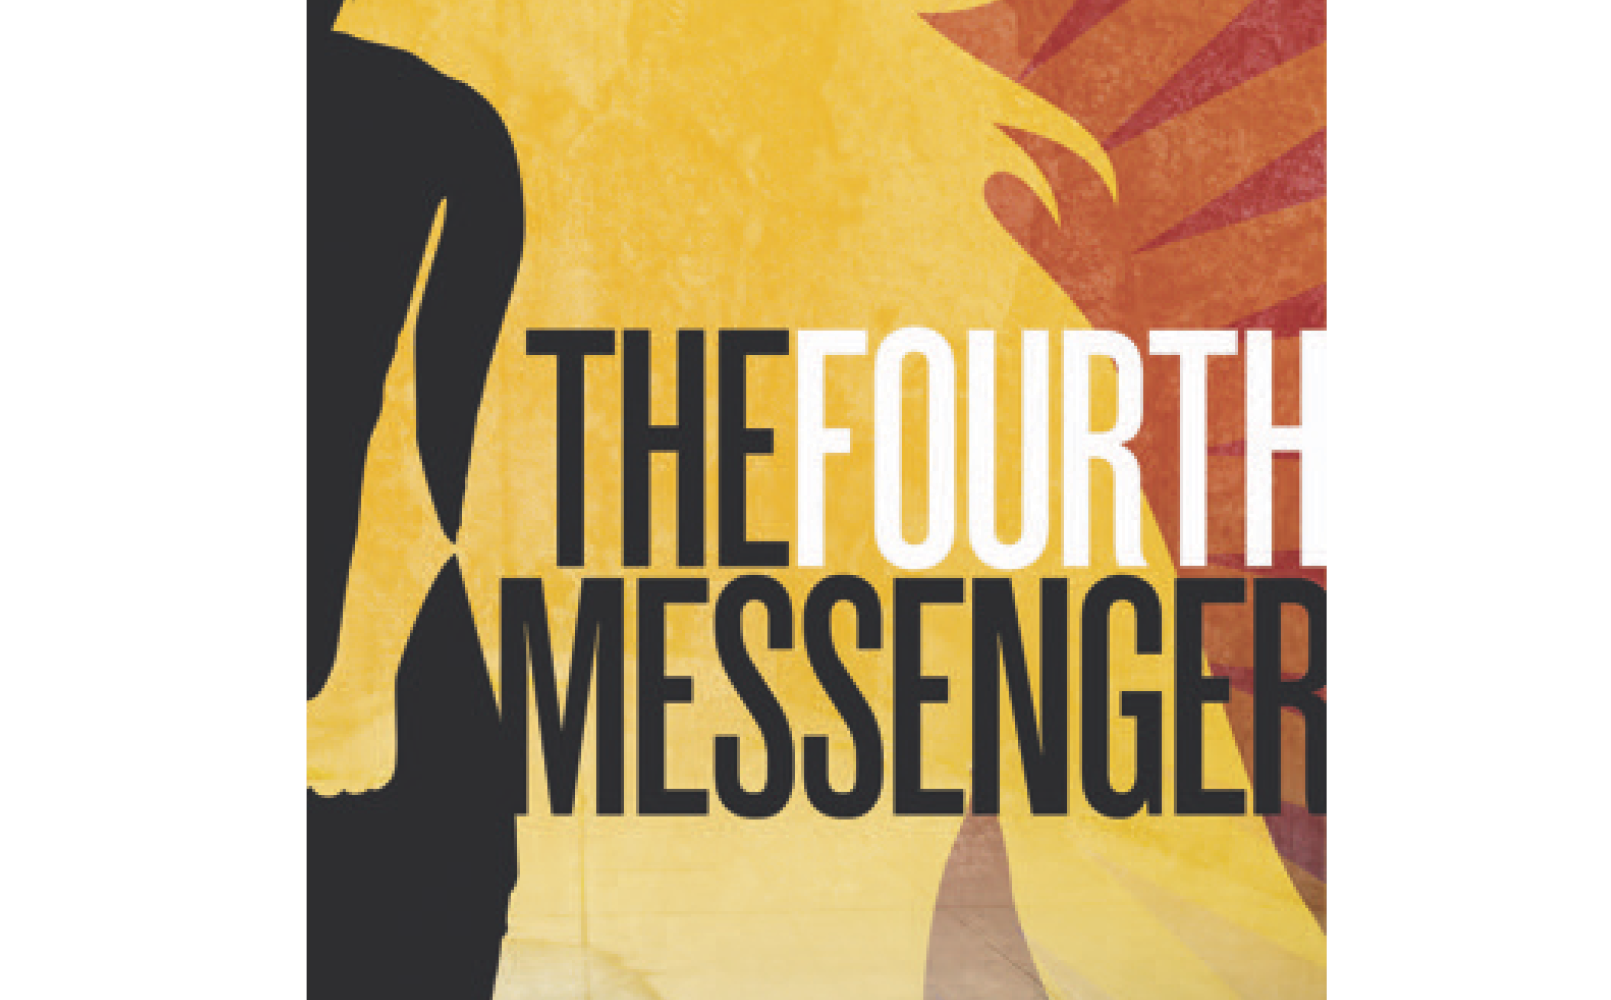 The Fourth Messenger